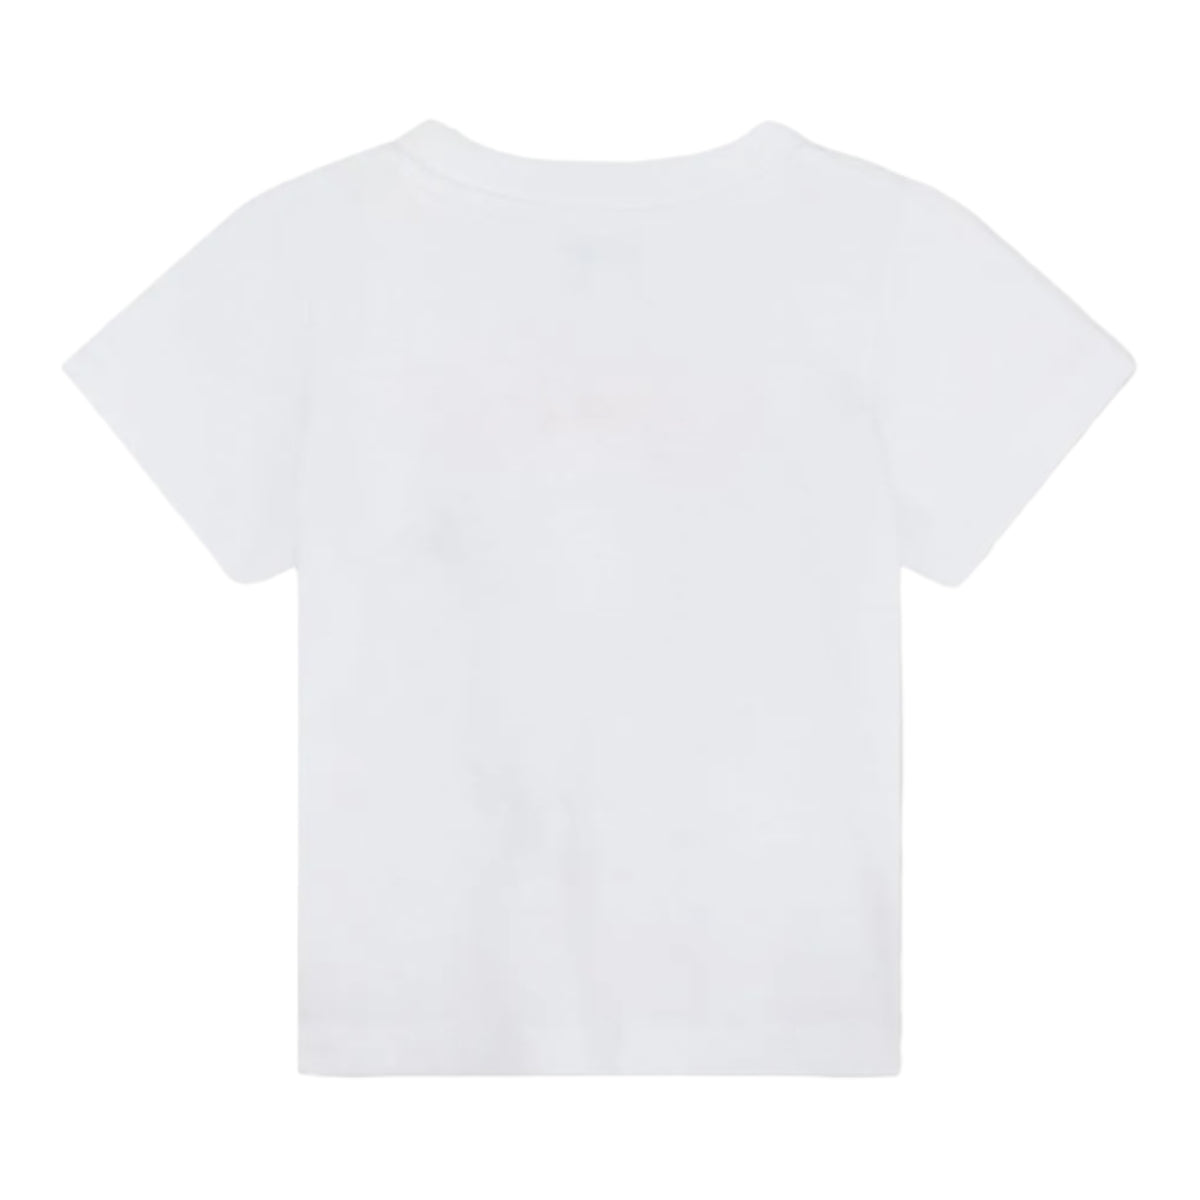 Kenzo Kids Toddler's Elephant Logo T-Shirt